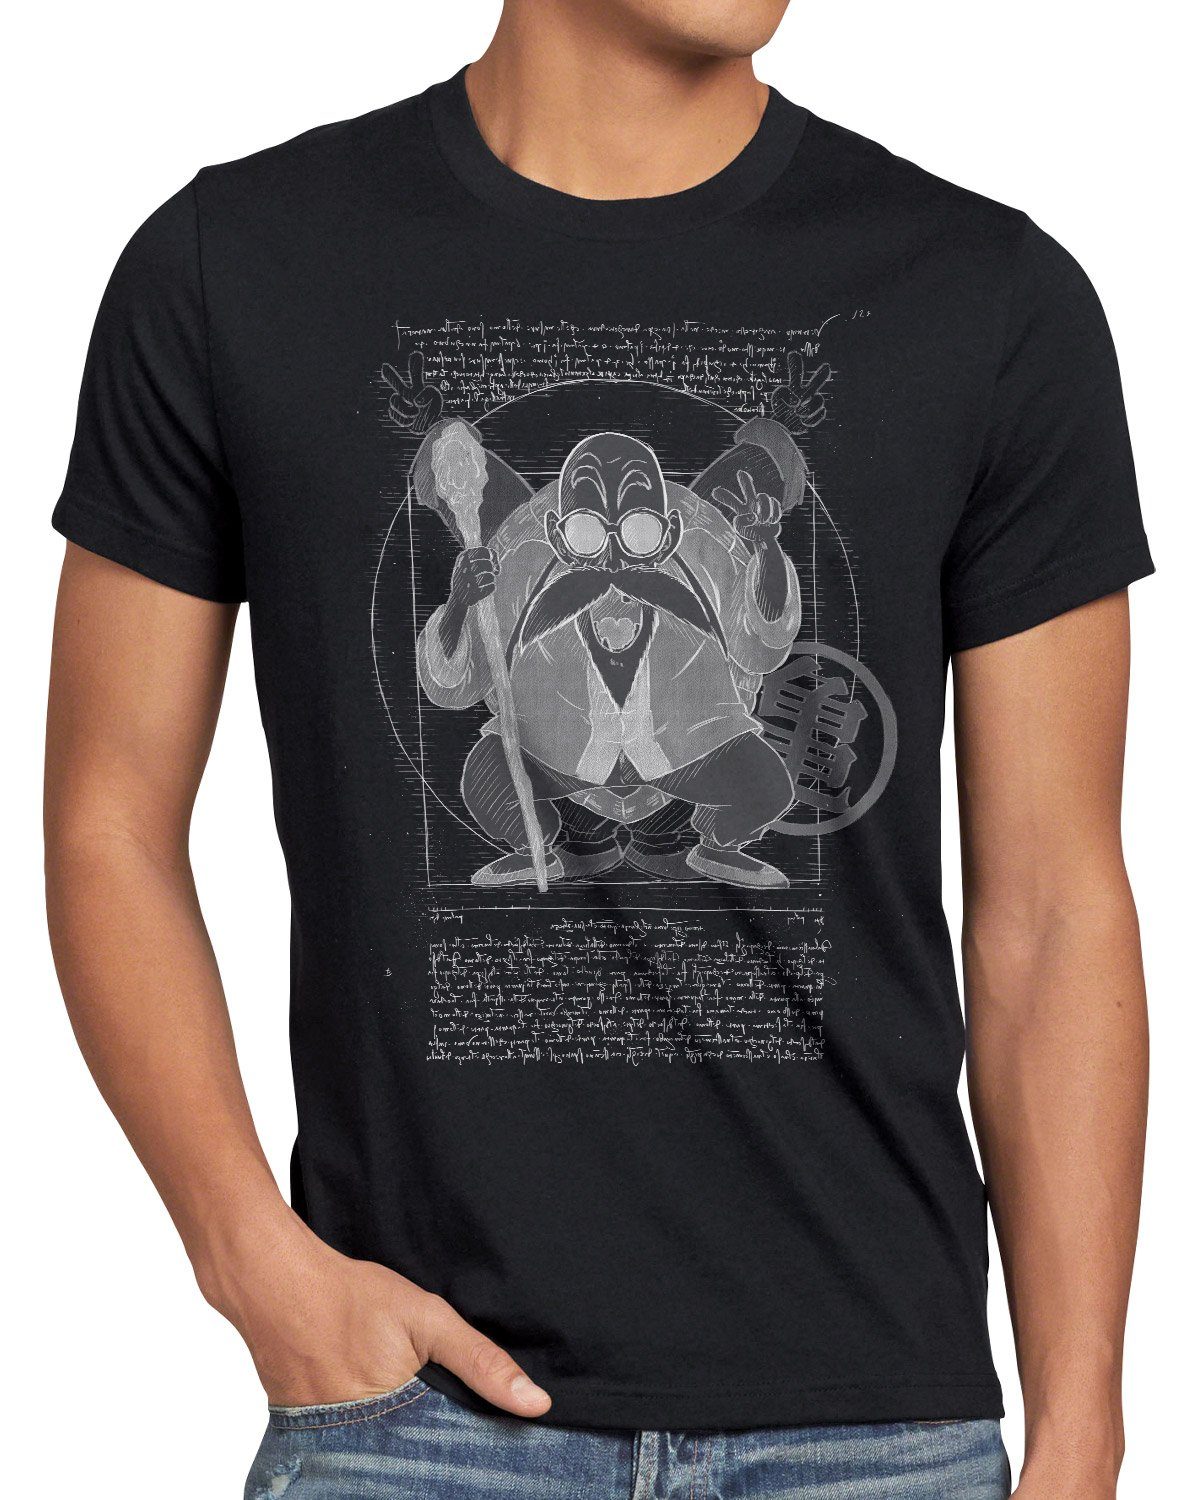 Roshi Herren T-Shirt songoku schwarz Print-Shirt Vitruvianischer style3 Z Muten vinci da